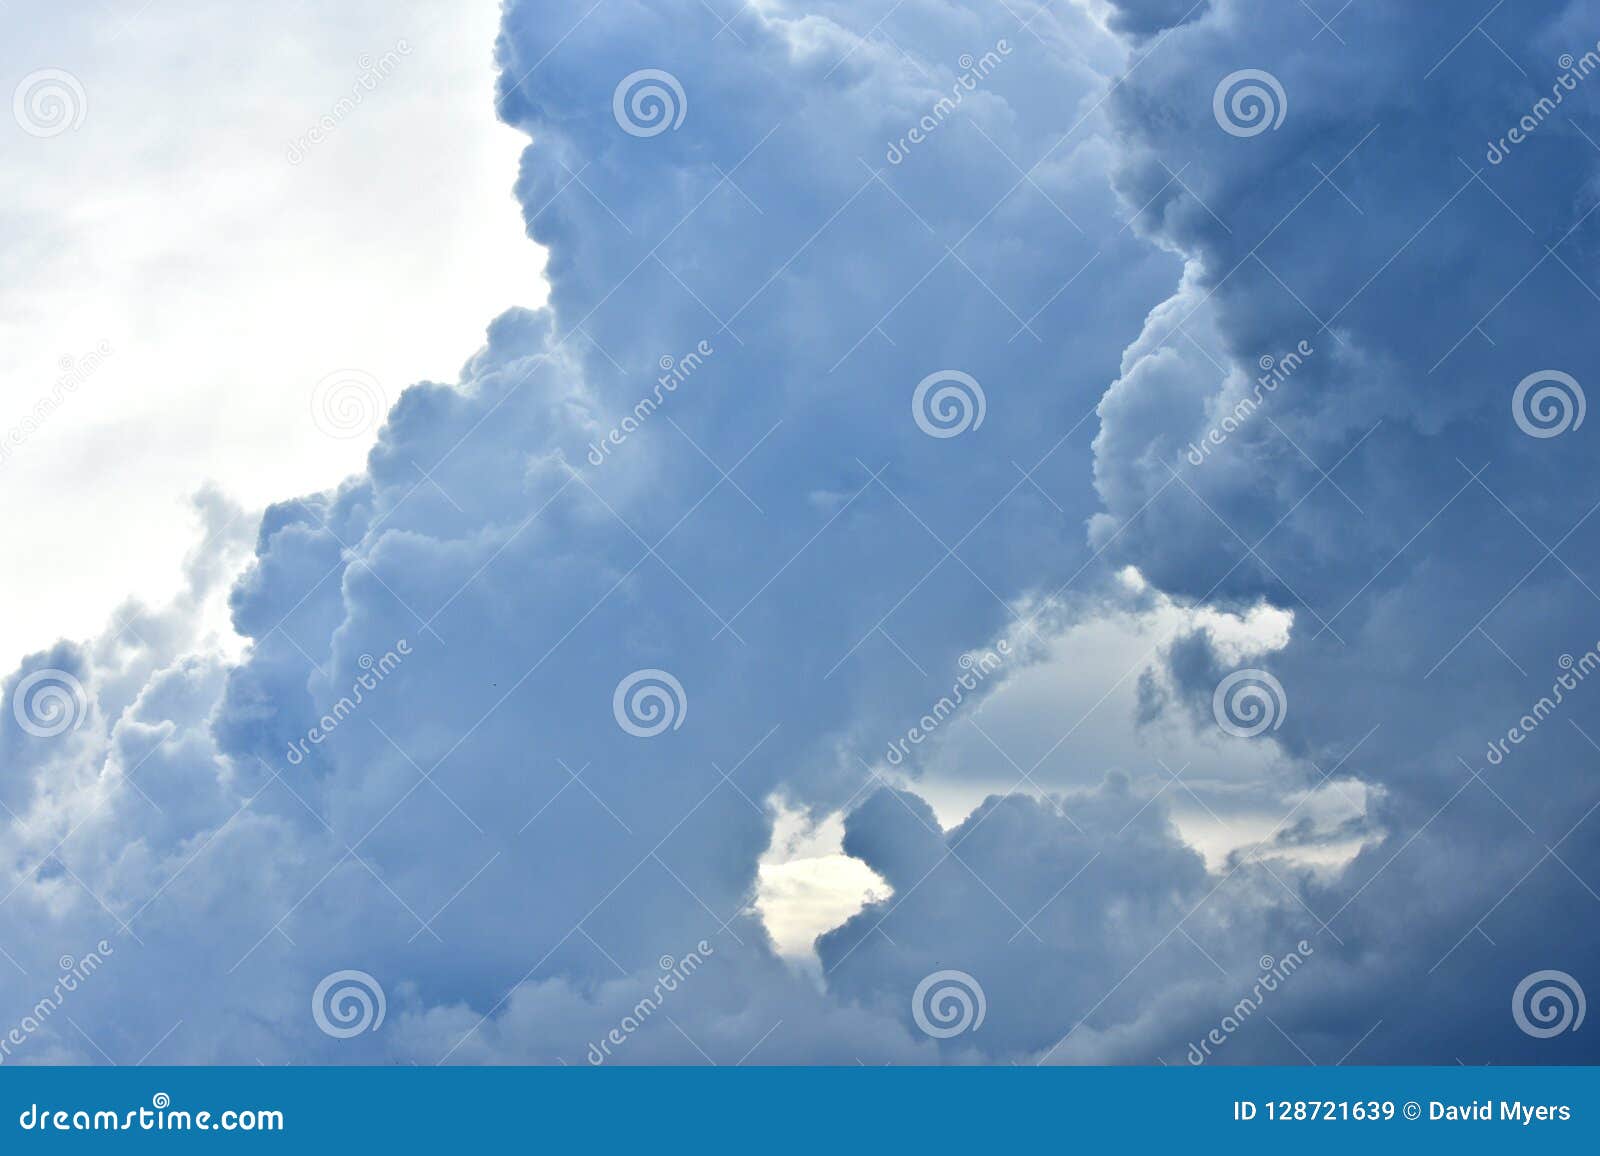 clouds, cumulo-nimbus, storm, fall weather